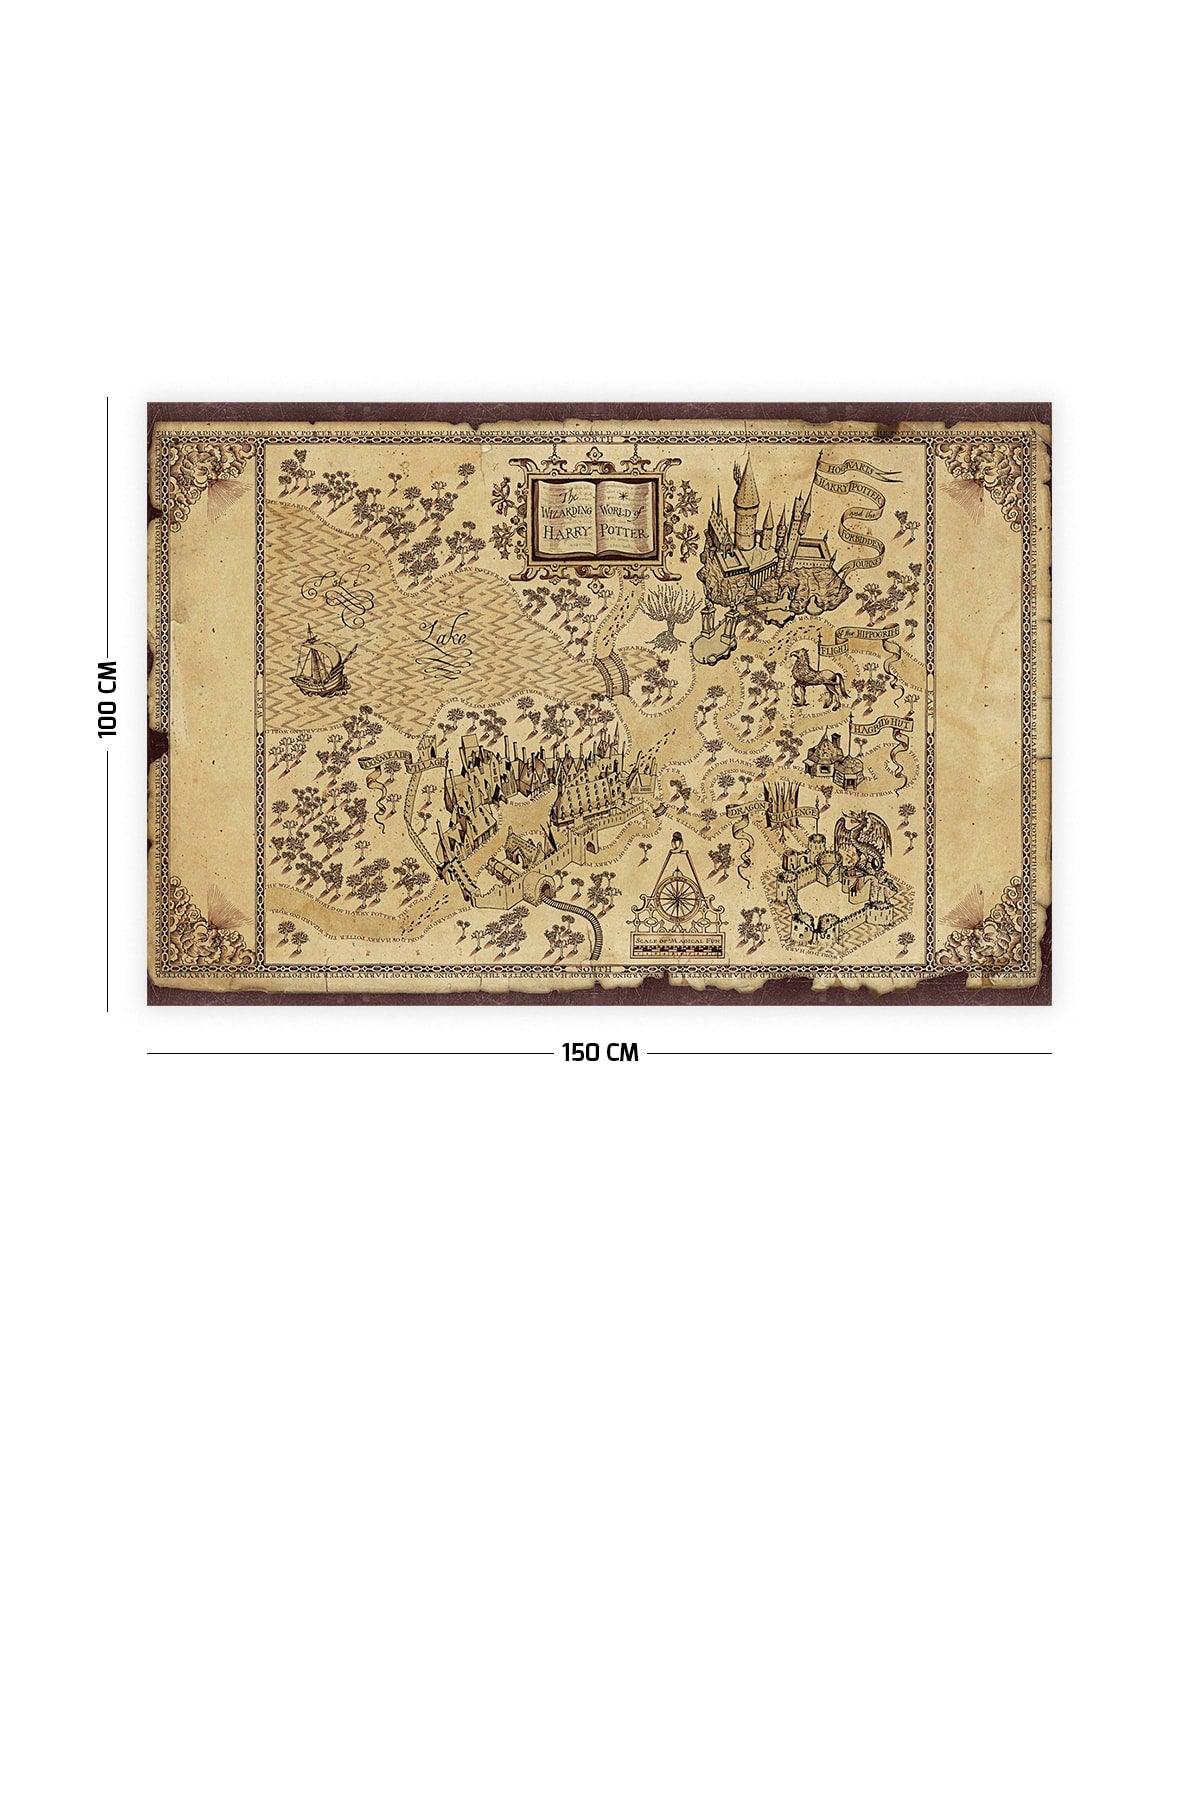 Harry Potter Marauder Map Wall Covering Carpet 140 X 100 Cm-70x100 Cm - Swordslife